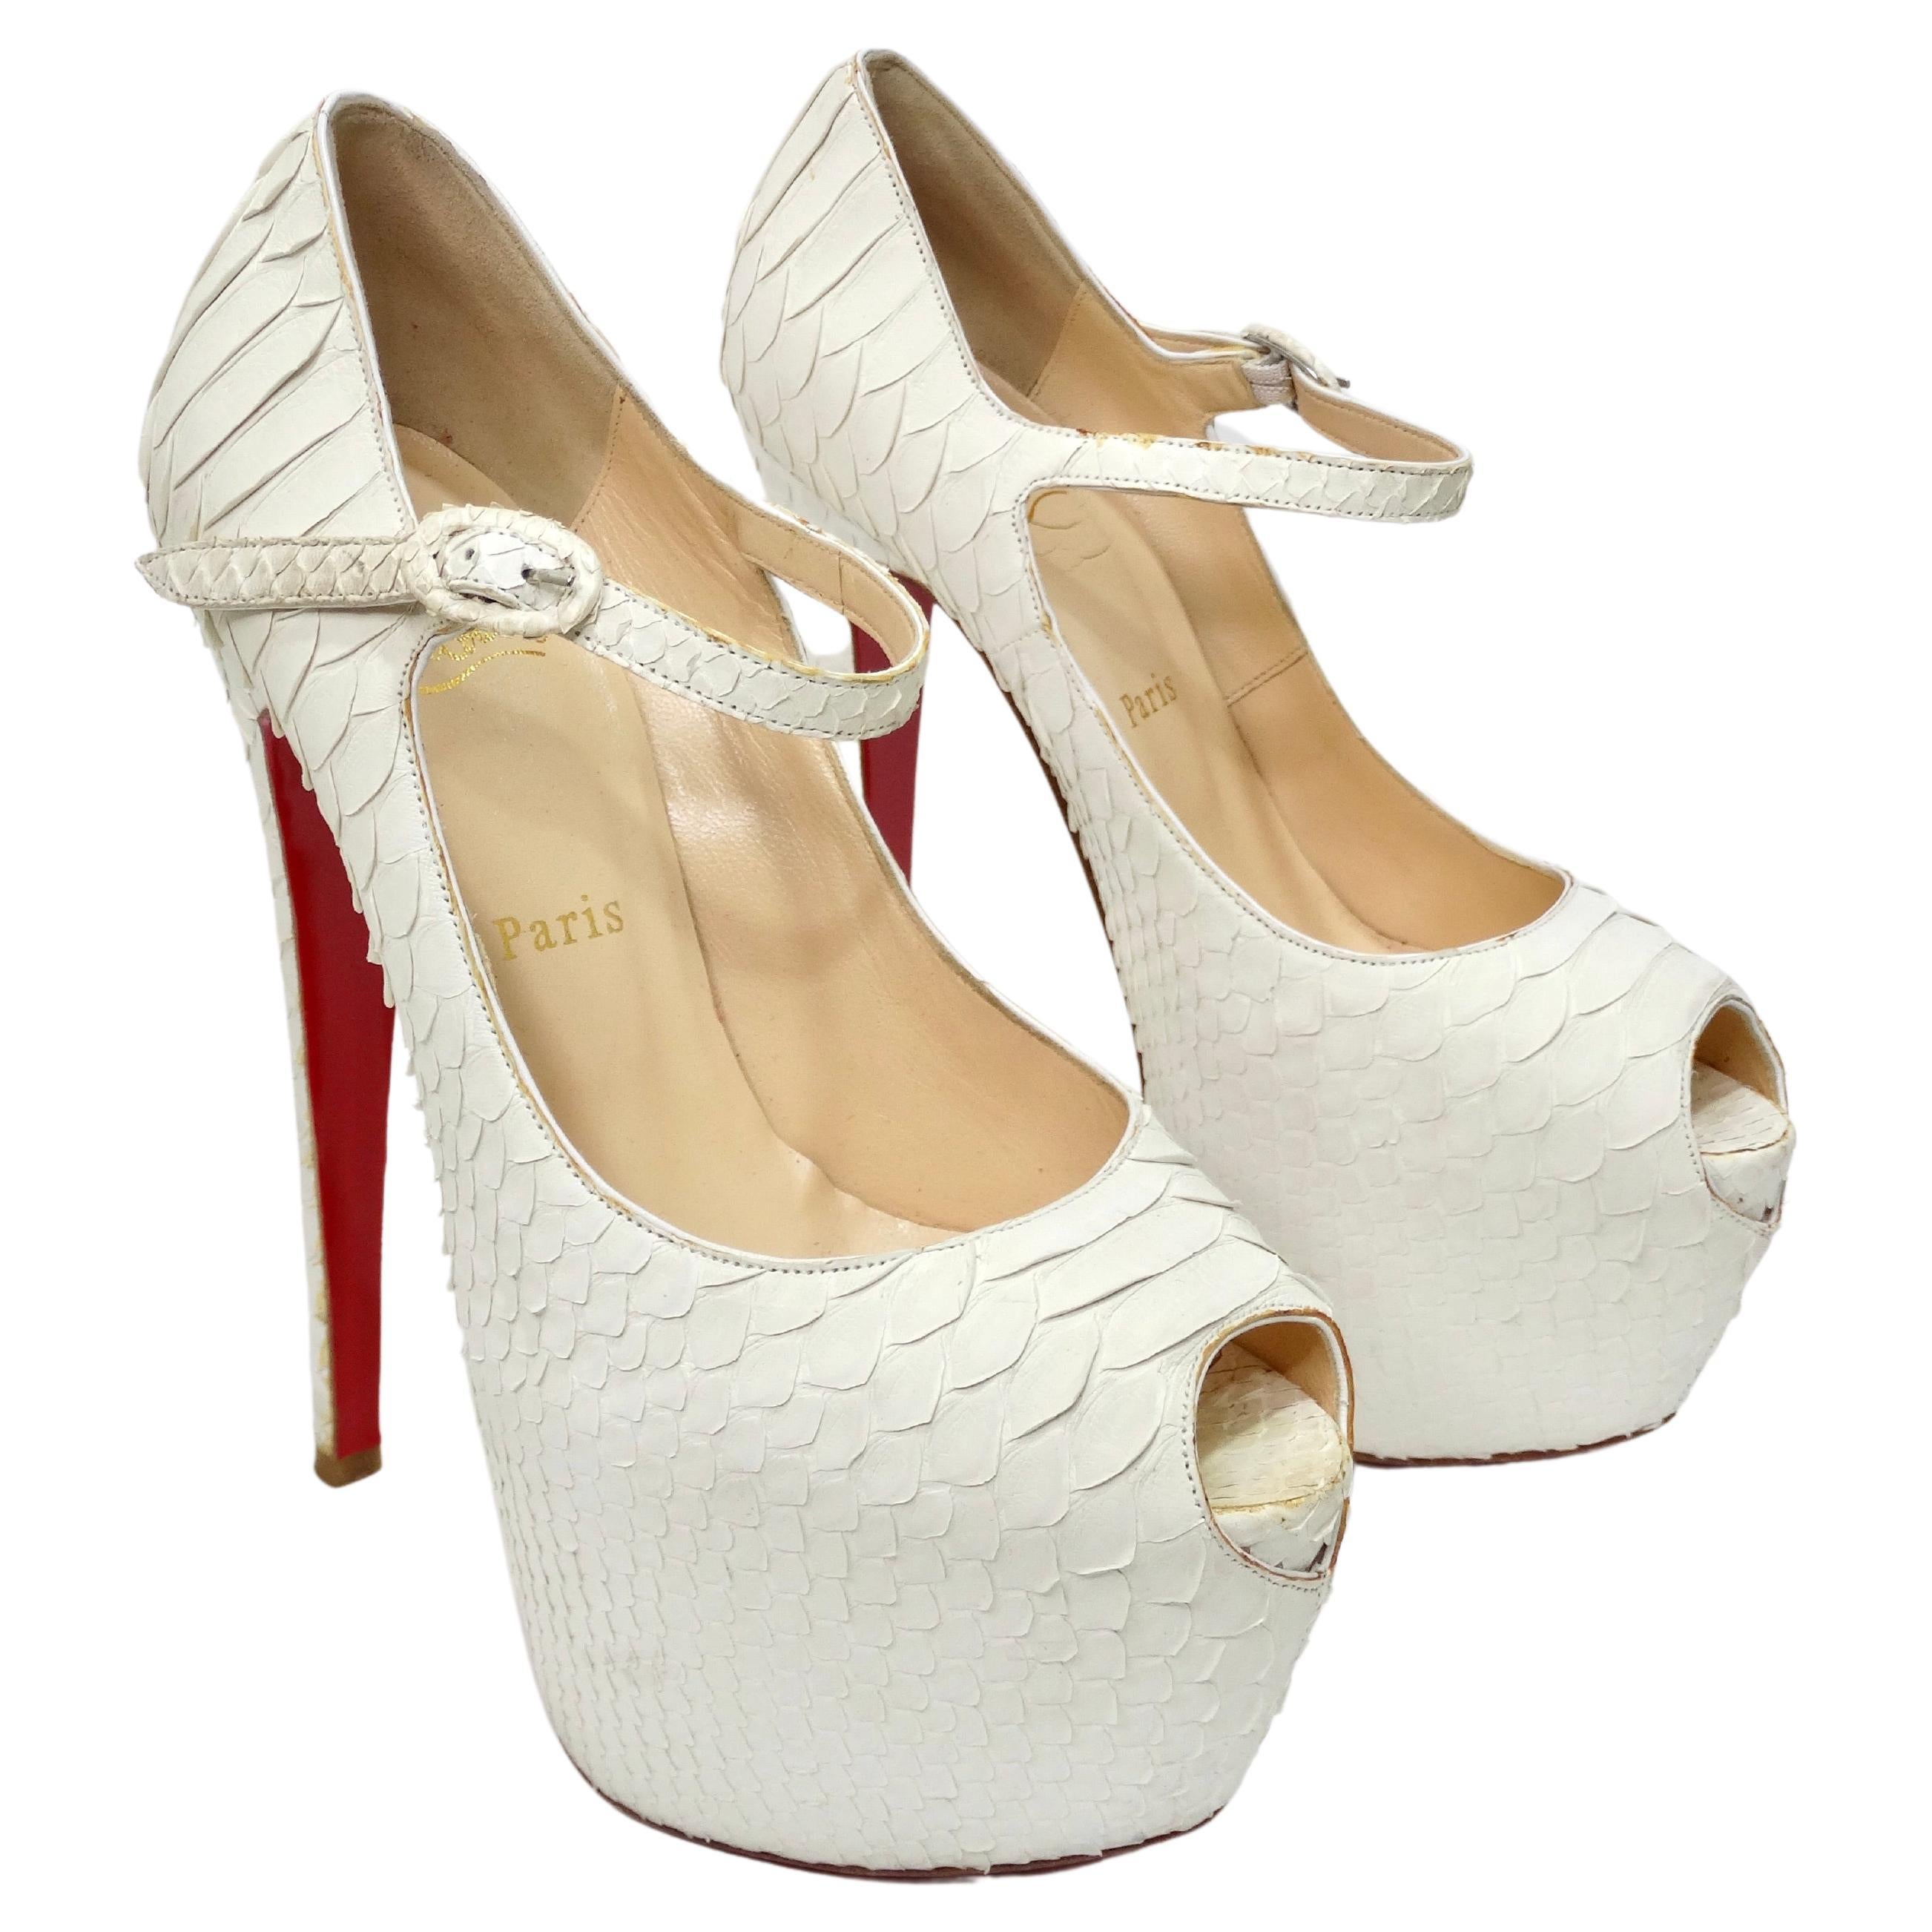 white red bottoms heels